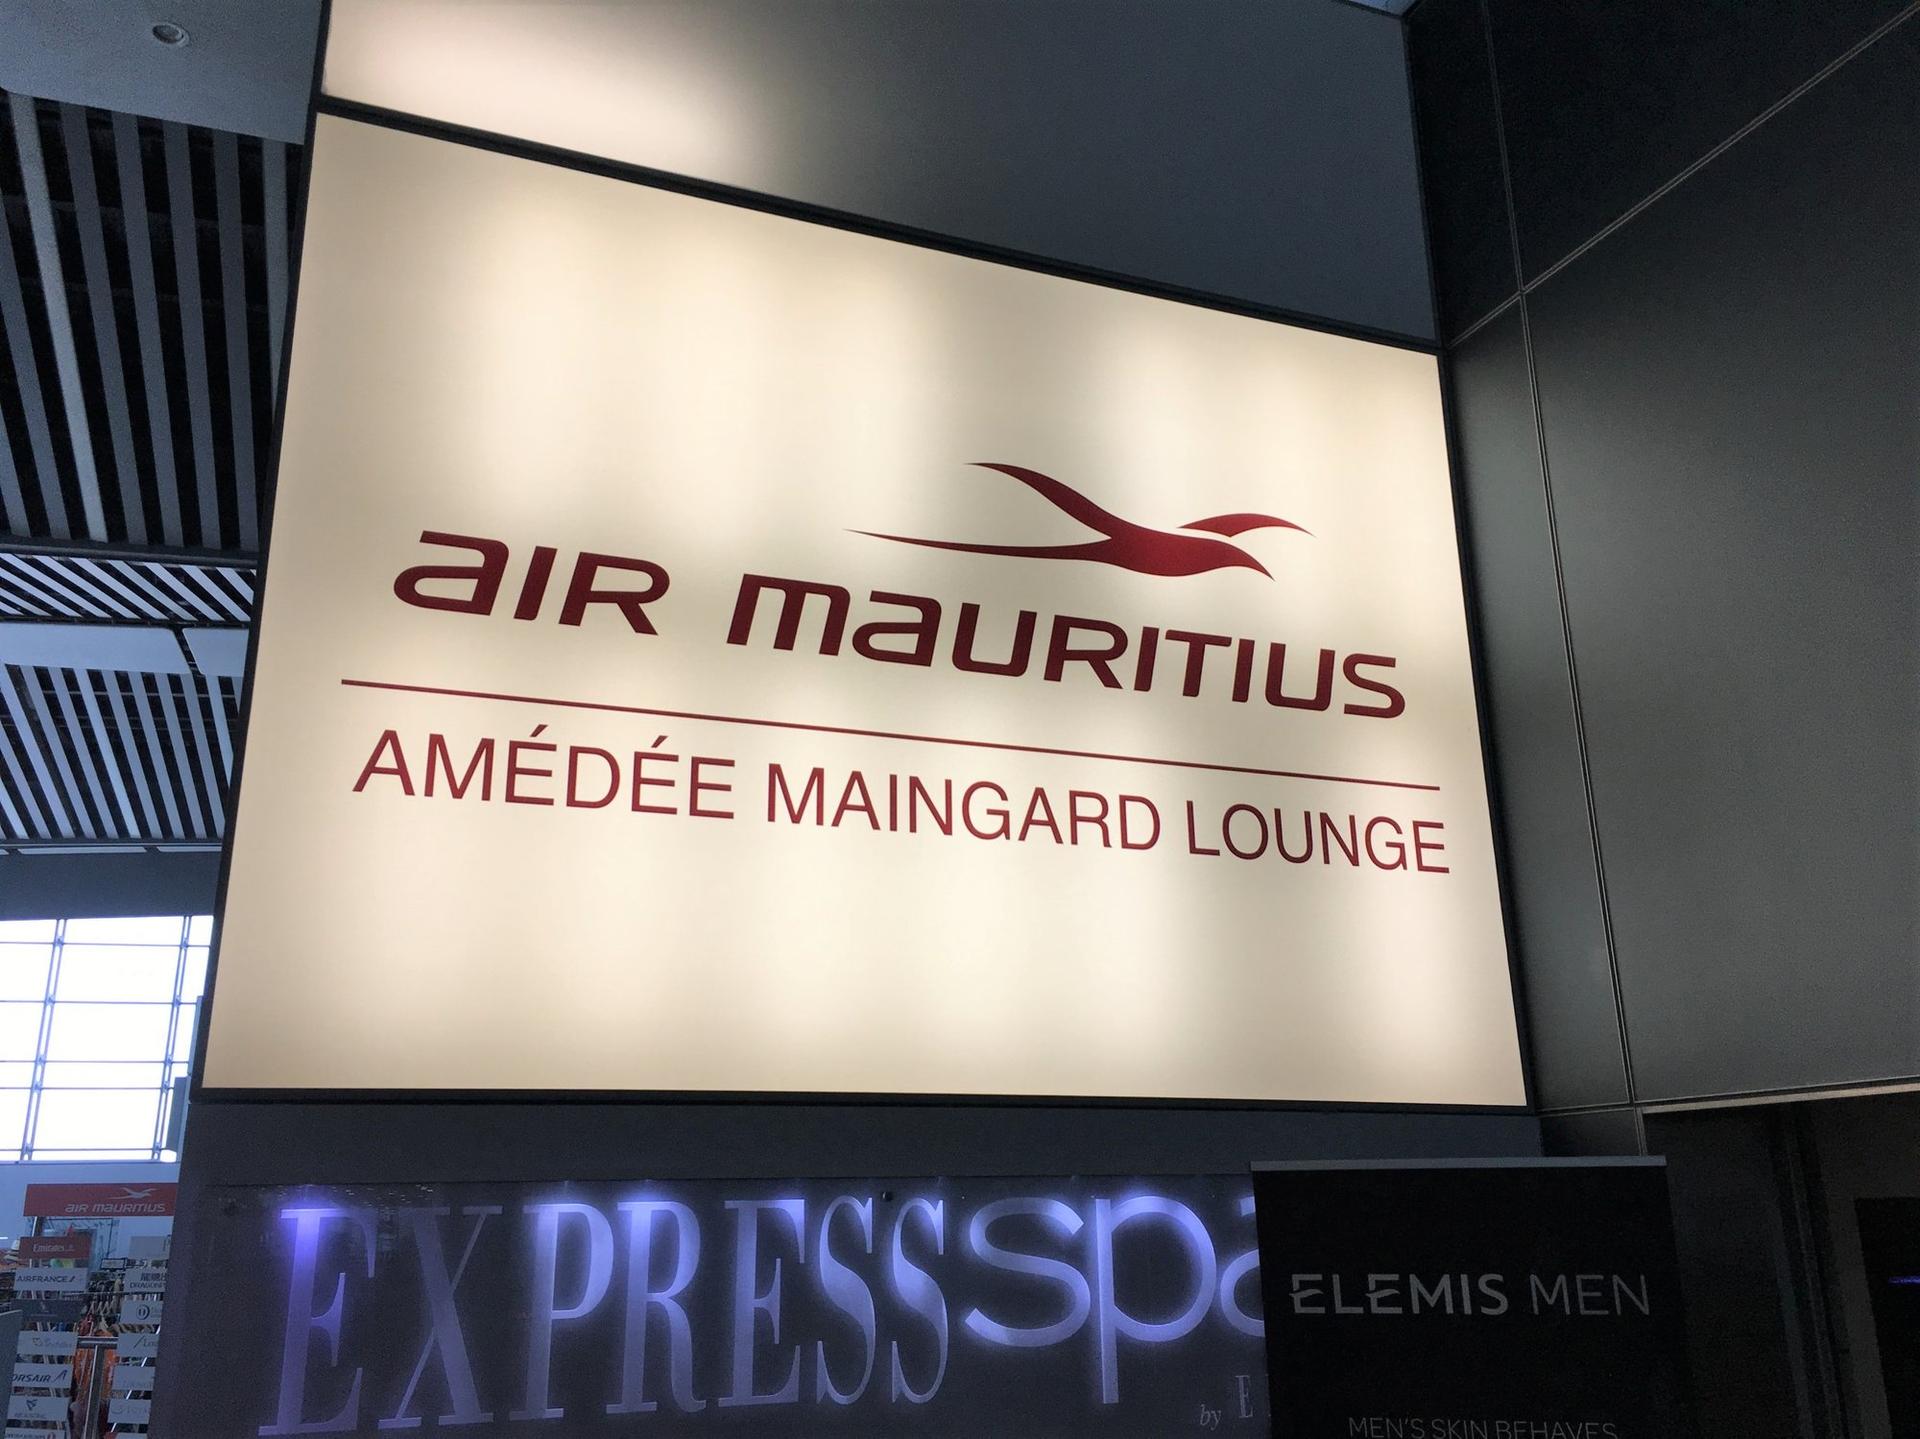 Air Mauritius Amedee Maingard Lounge image 39 of 43